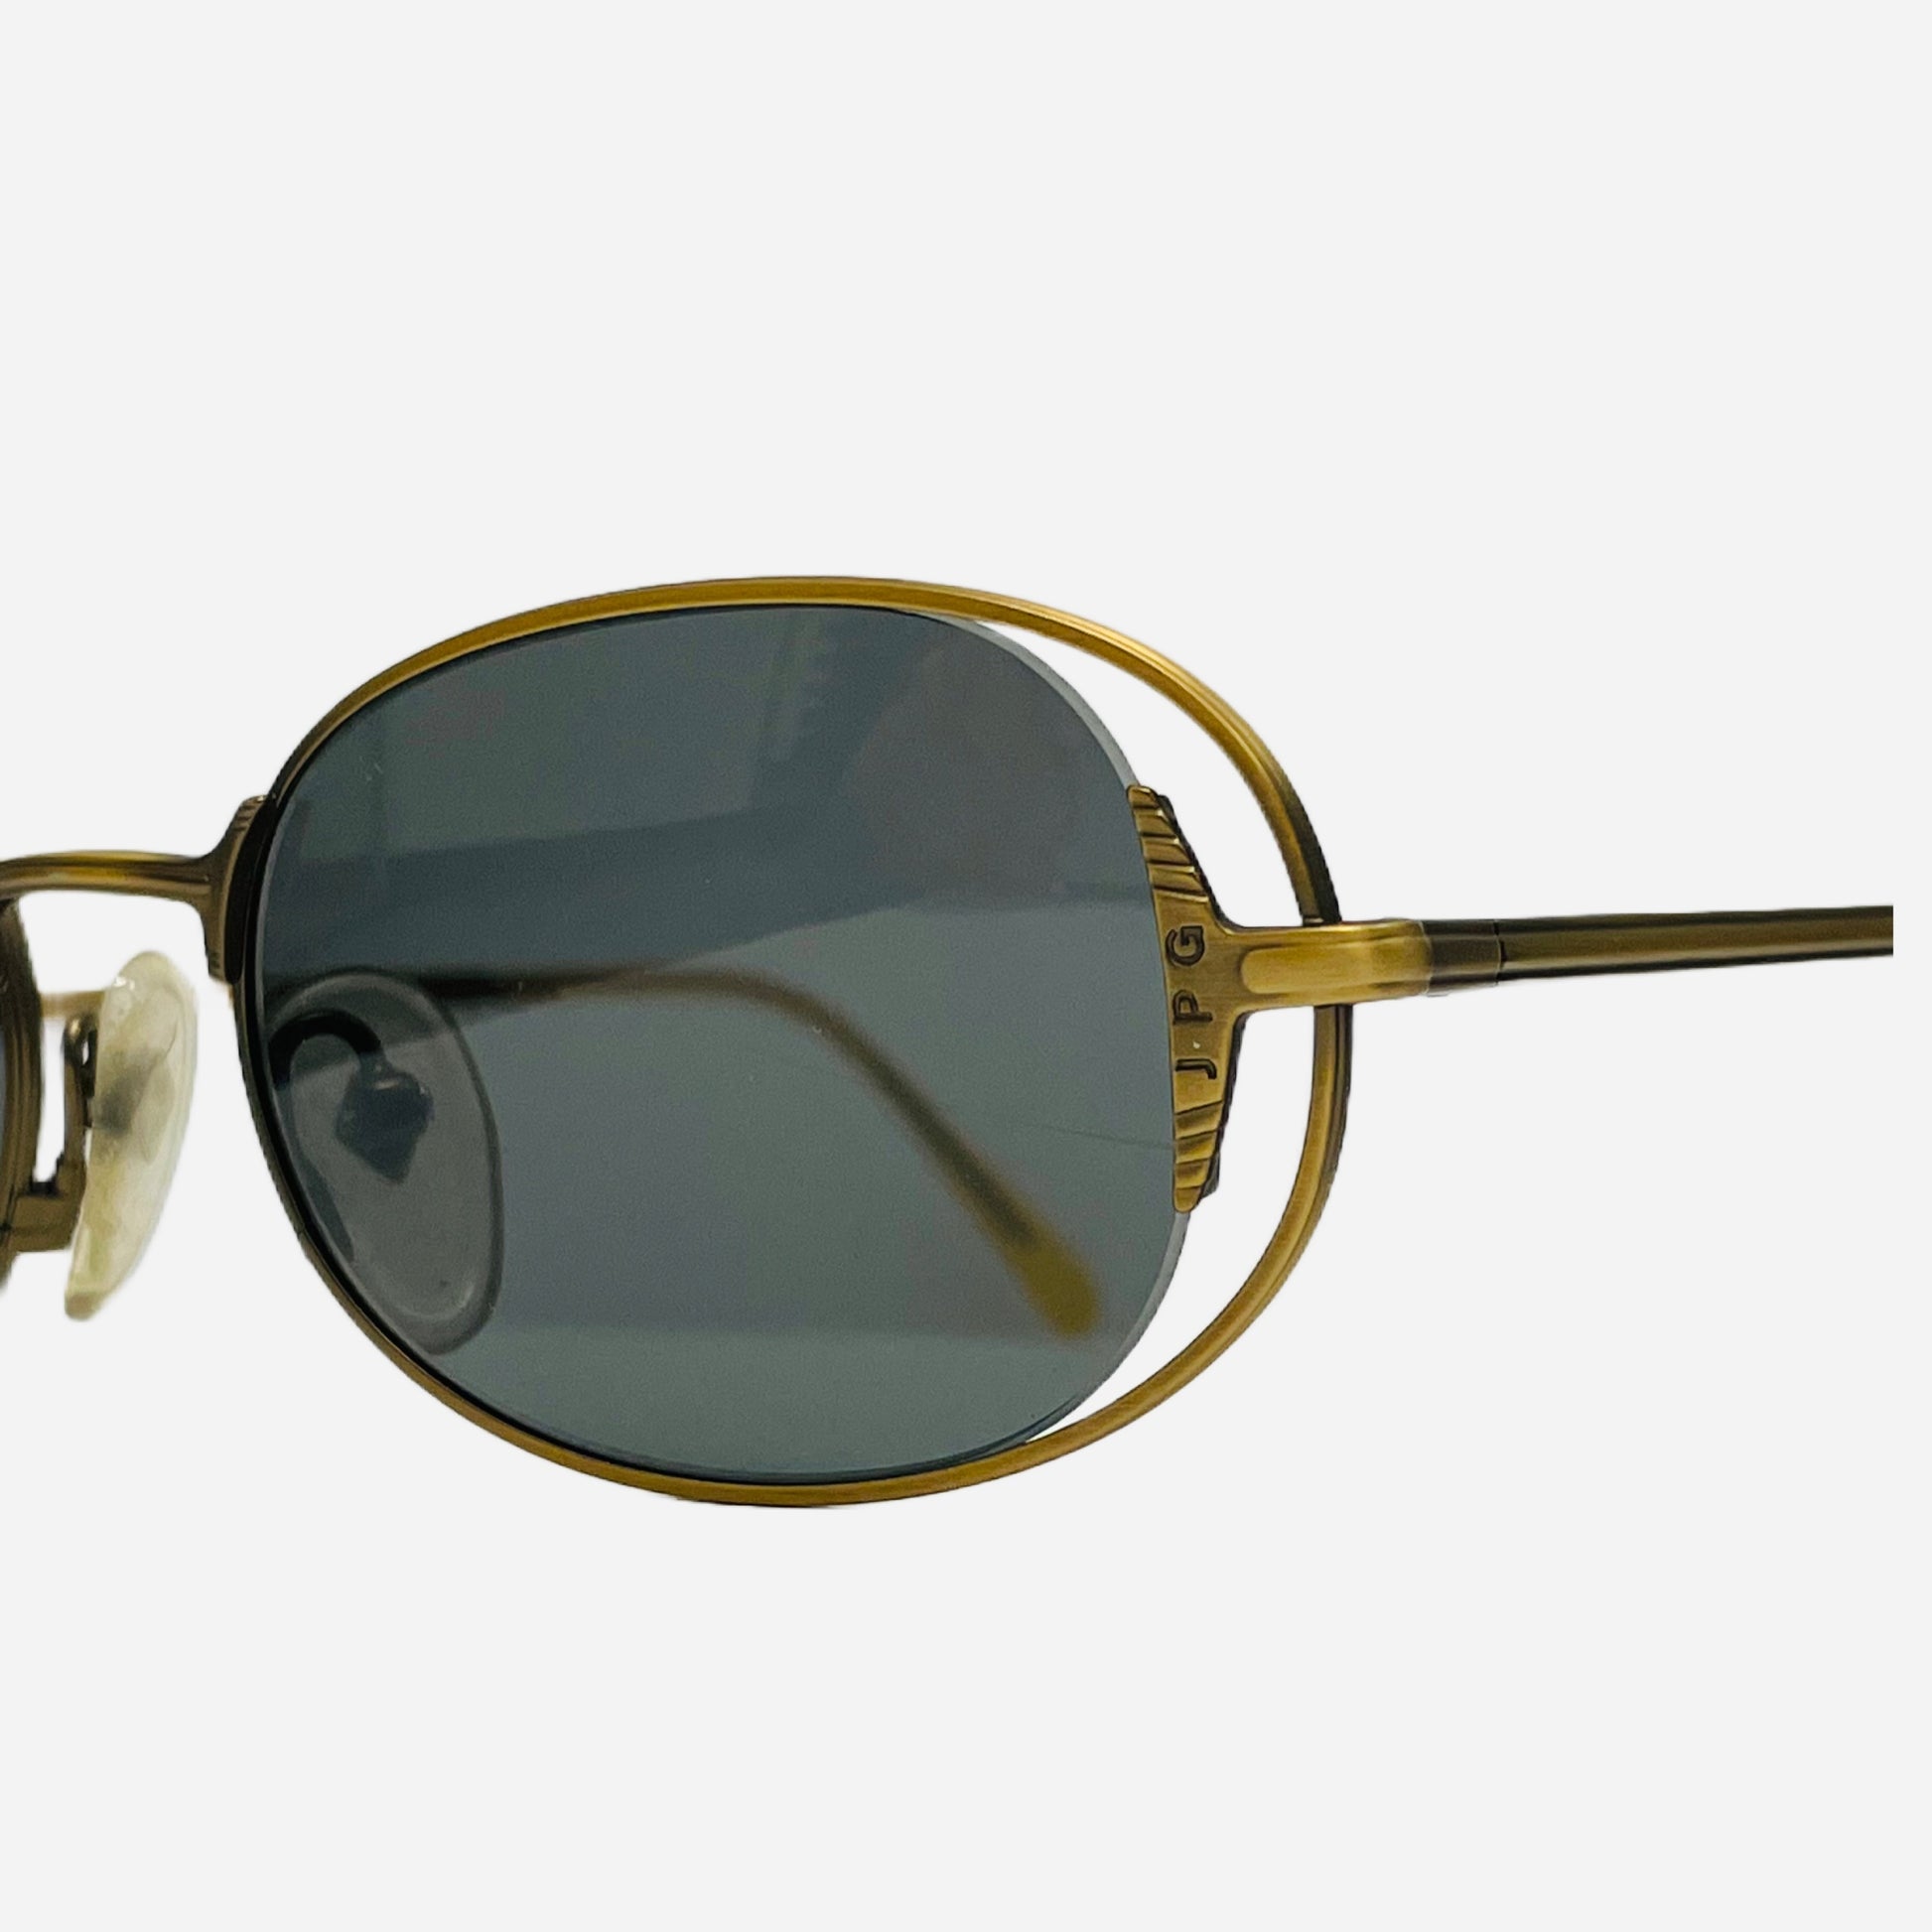 Vintage-Jean-Paul-Gaultier-Sonnenbrille-Sunglasses-Model56-3172-made-in-japan-the-seekersfront-side-right